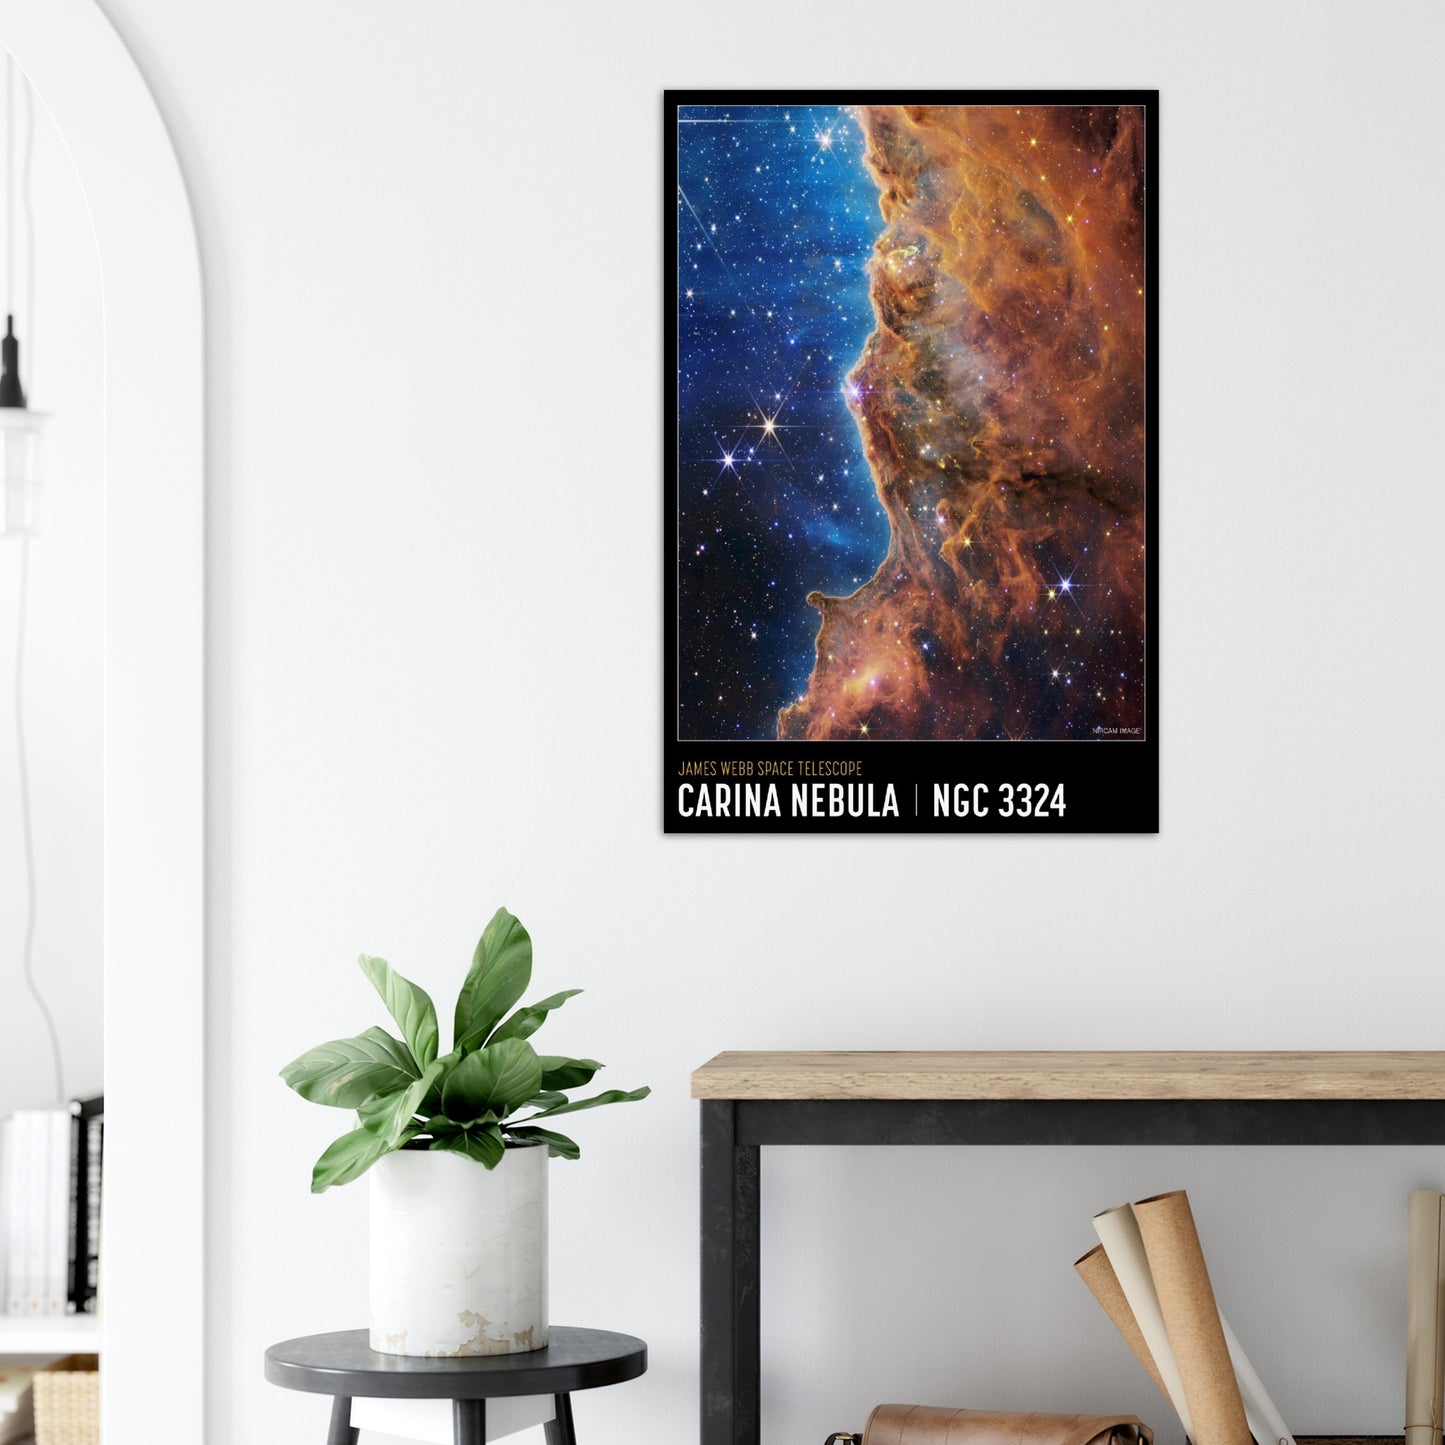 NASA-Poster – Carina Nebula Poster vom James Webb Space Telescope der NASA – hochwertiges mattes Papier